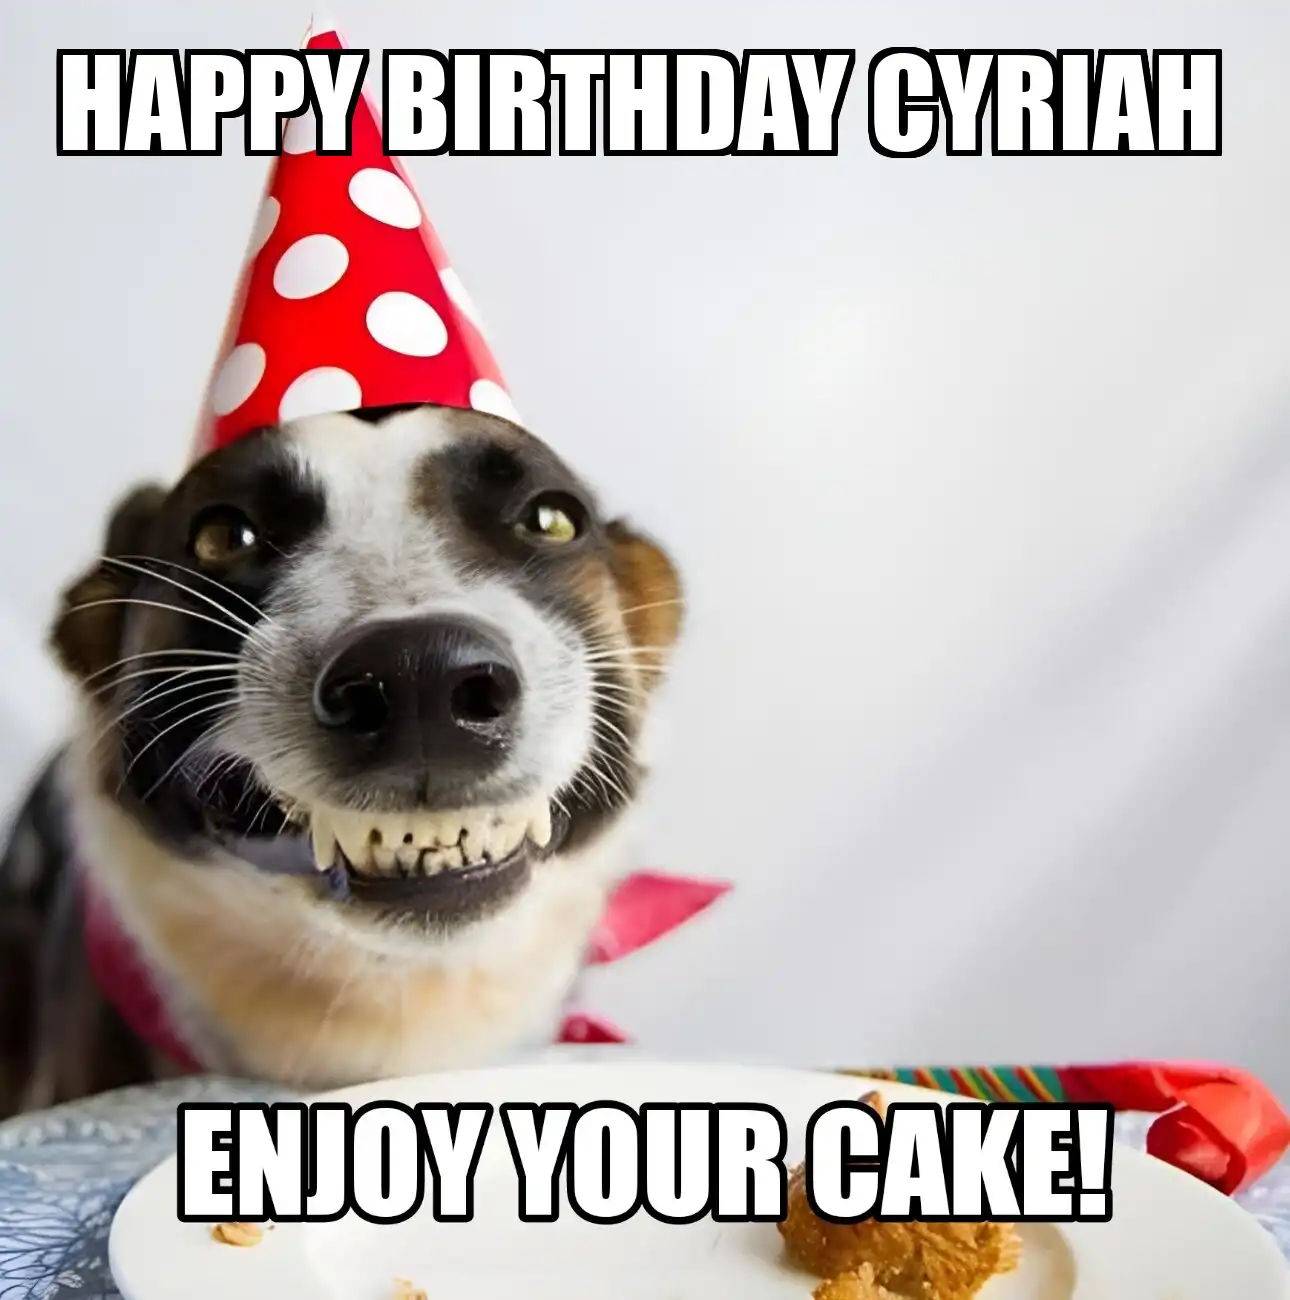 Happy Birthday Cyriah Enjoy Your Cake Dog Meme